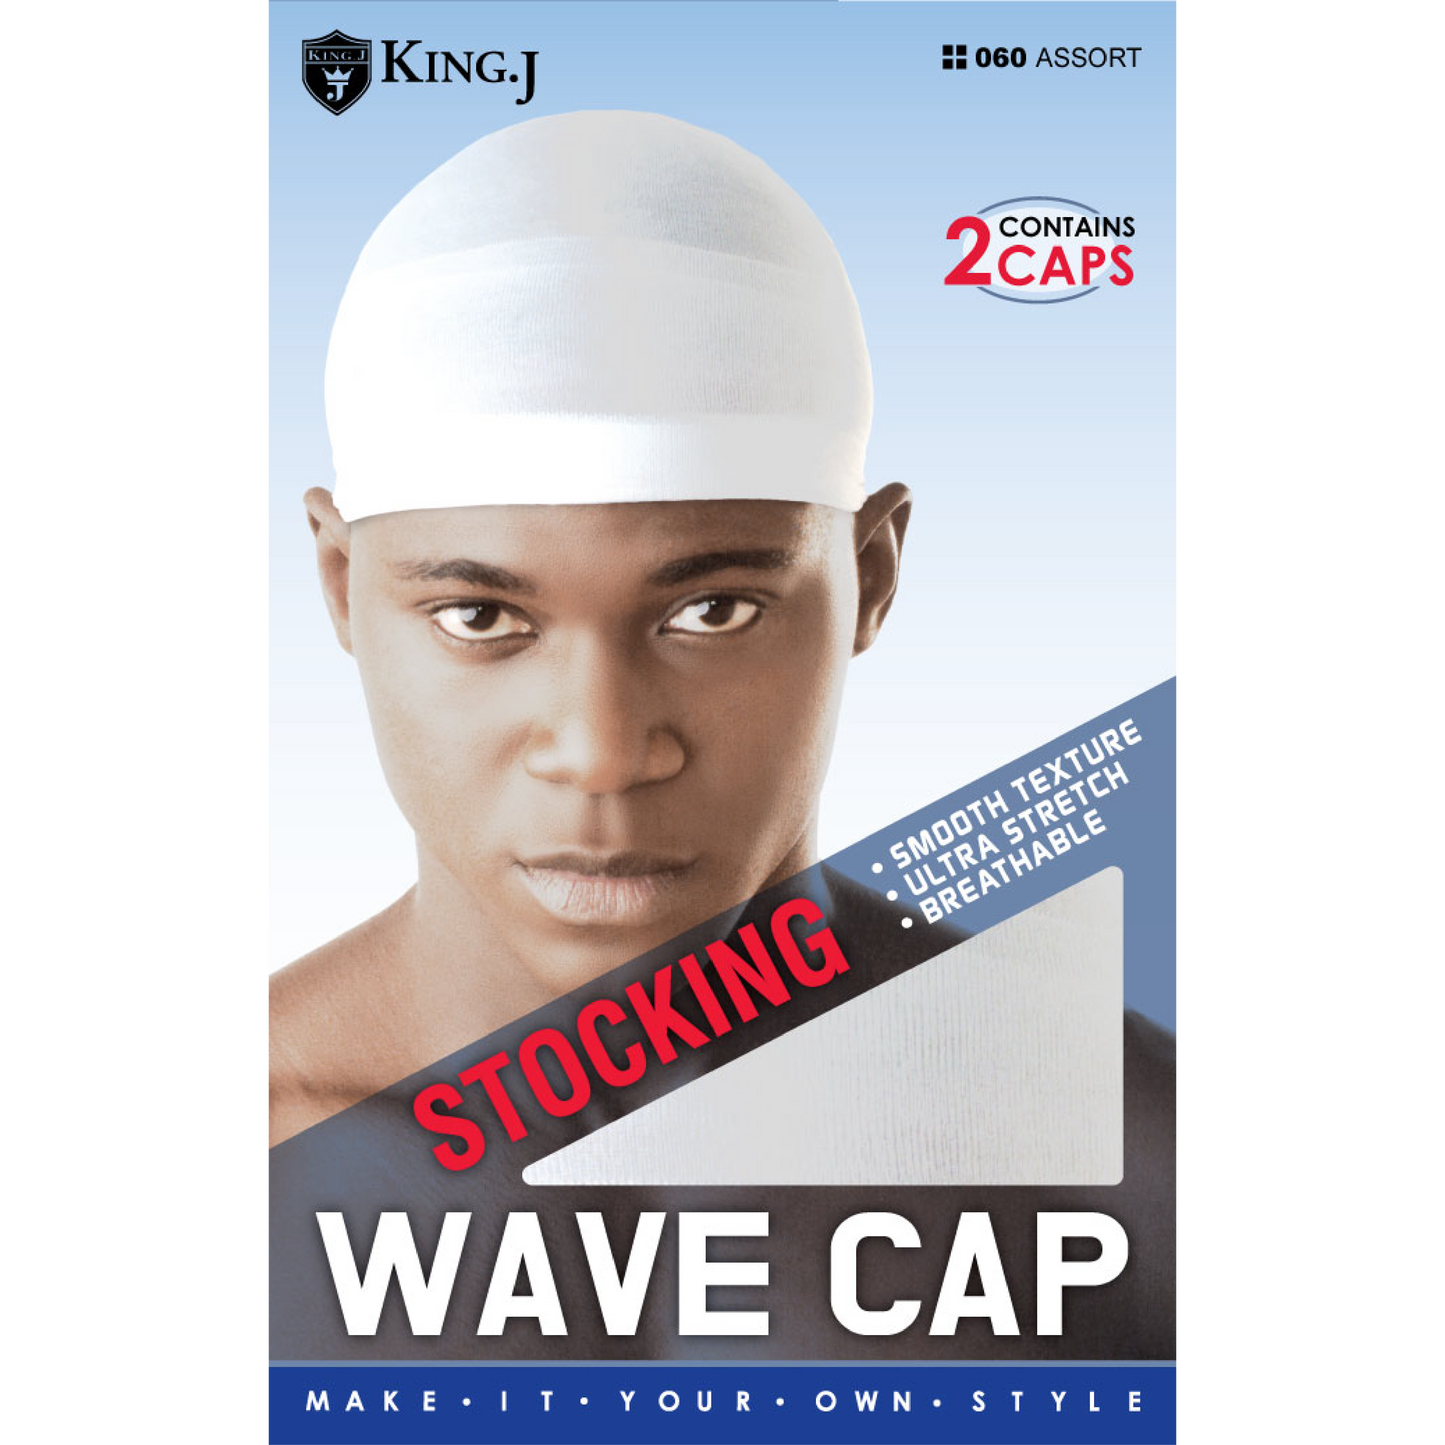 STOCKING WAVE CAP